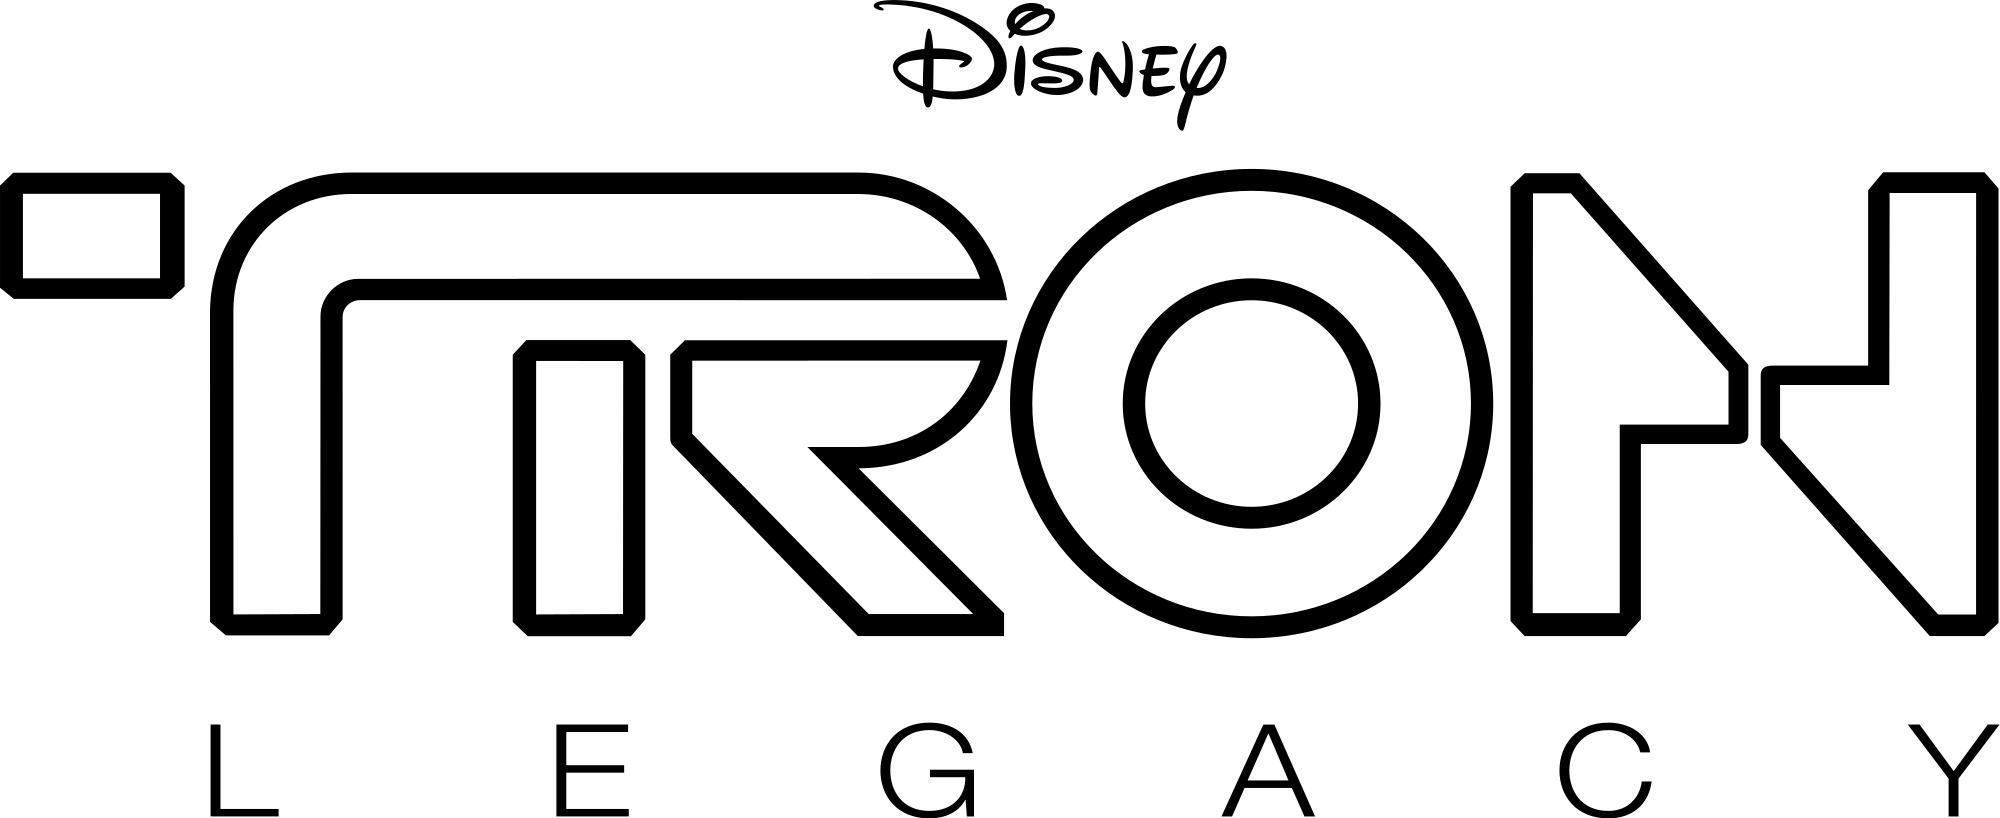 Tron Movie Logo - Tron Legacy Logo.svg